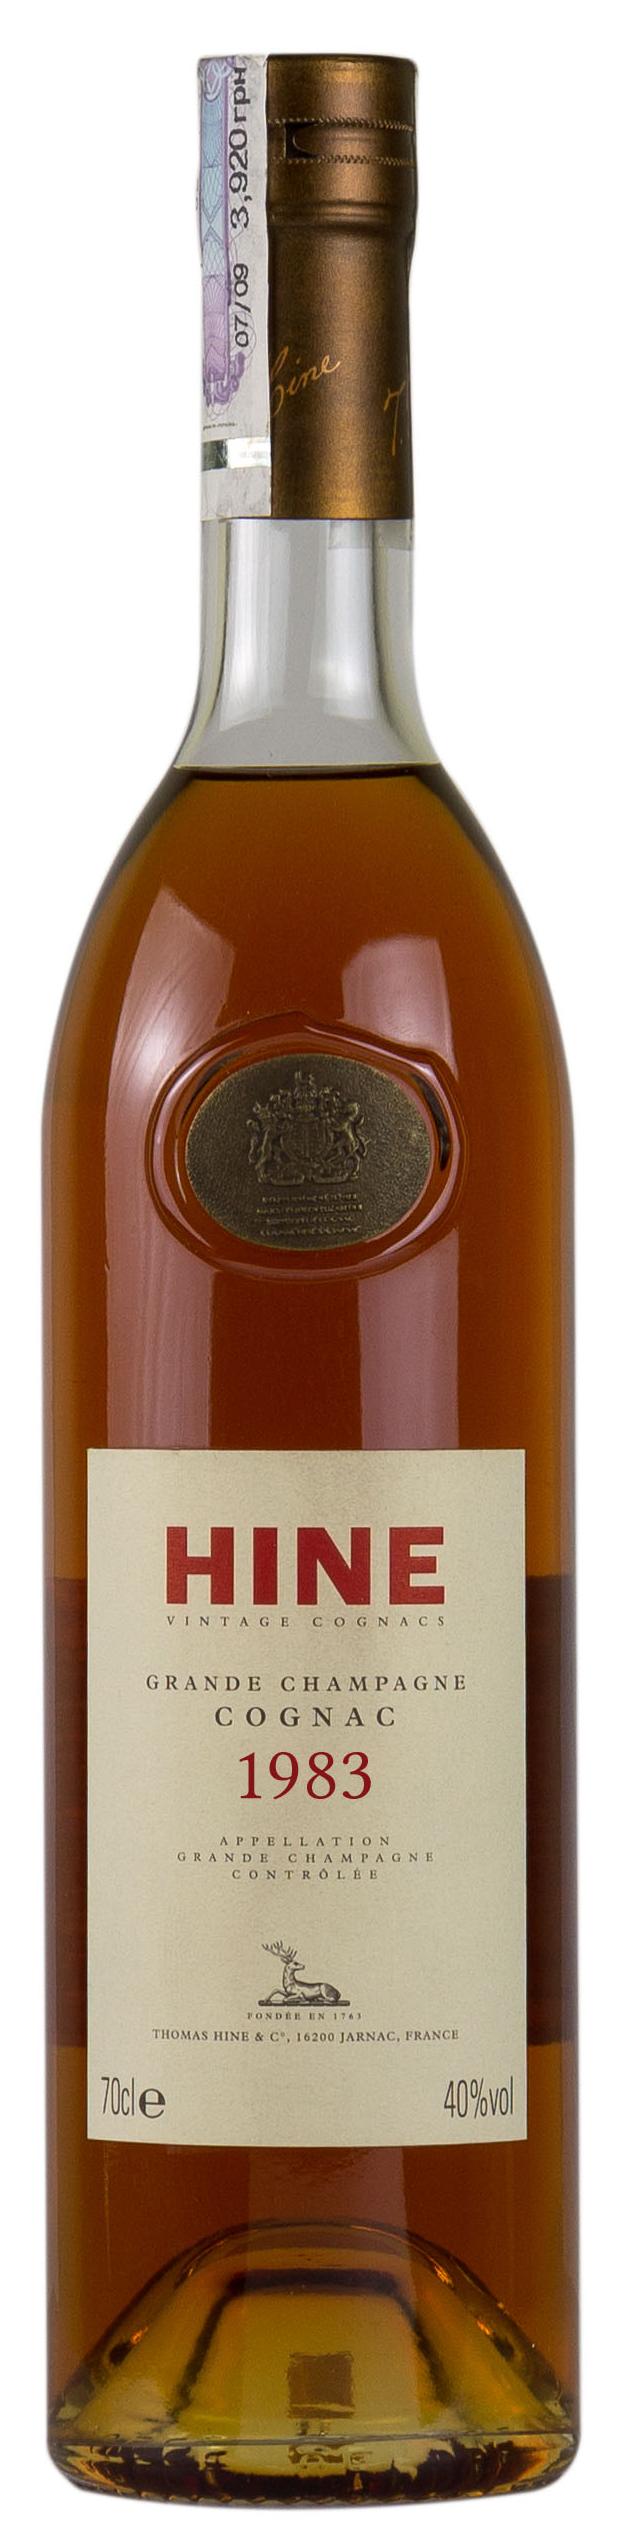 Hine Vintage 1983 Grande Champagne Jarnac - 3